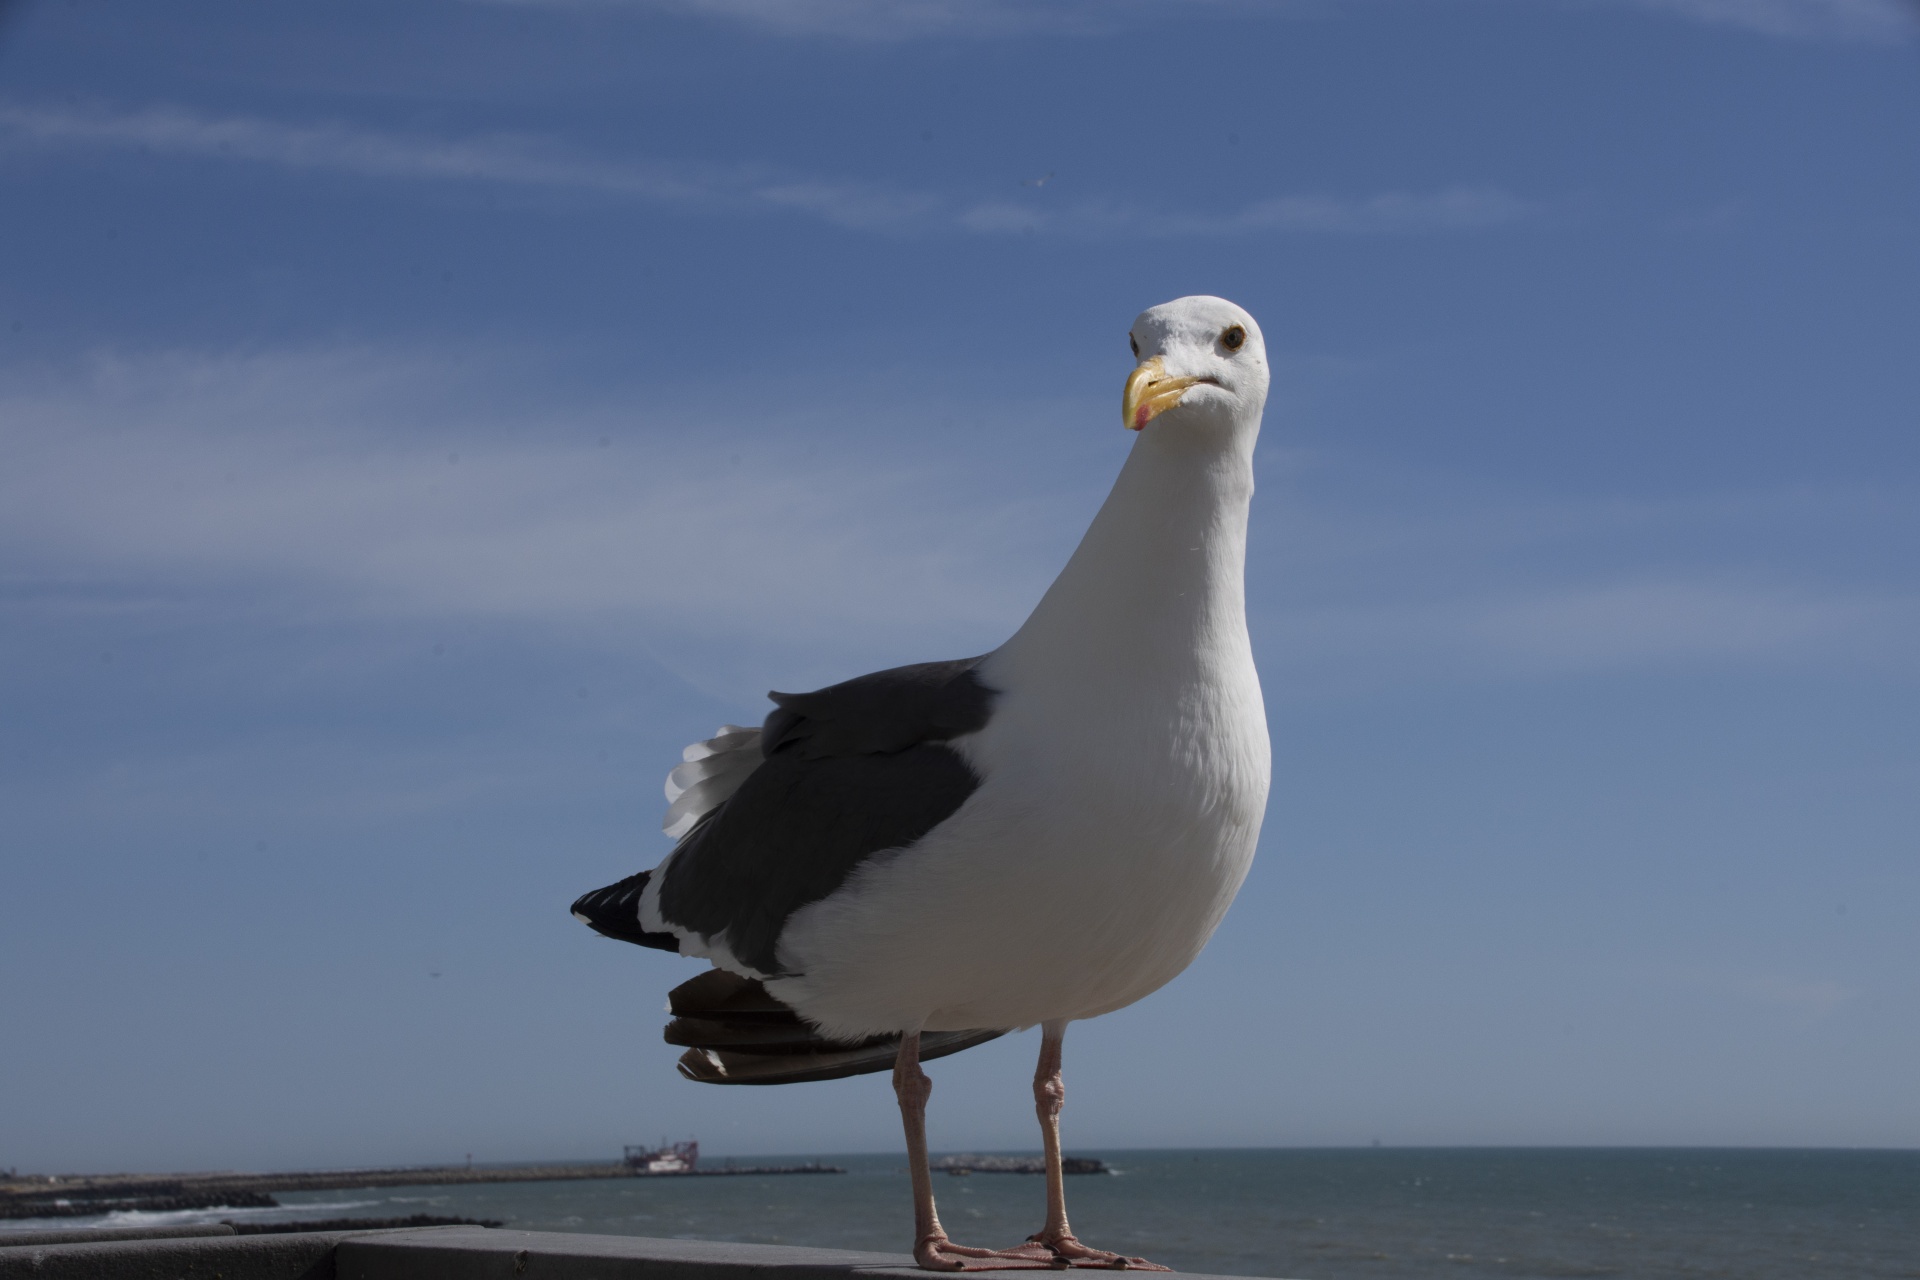 Curious Seagull